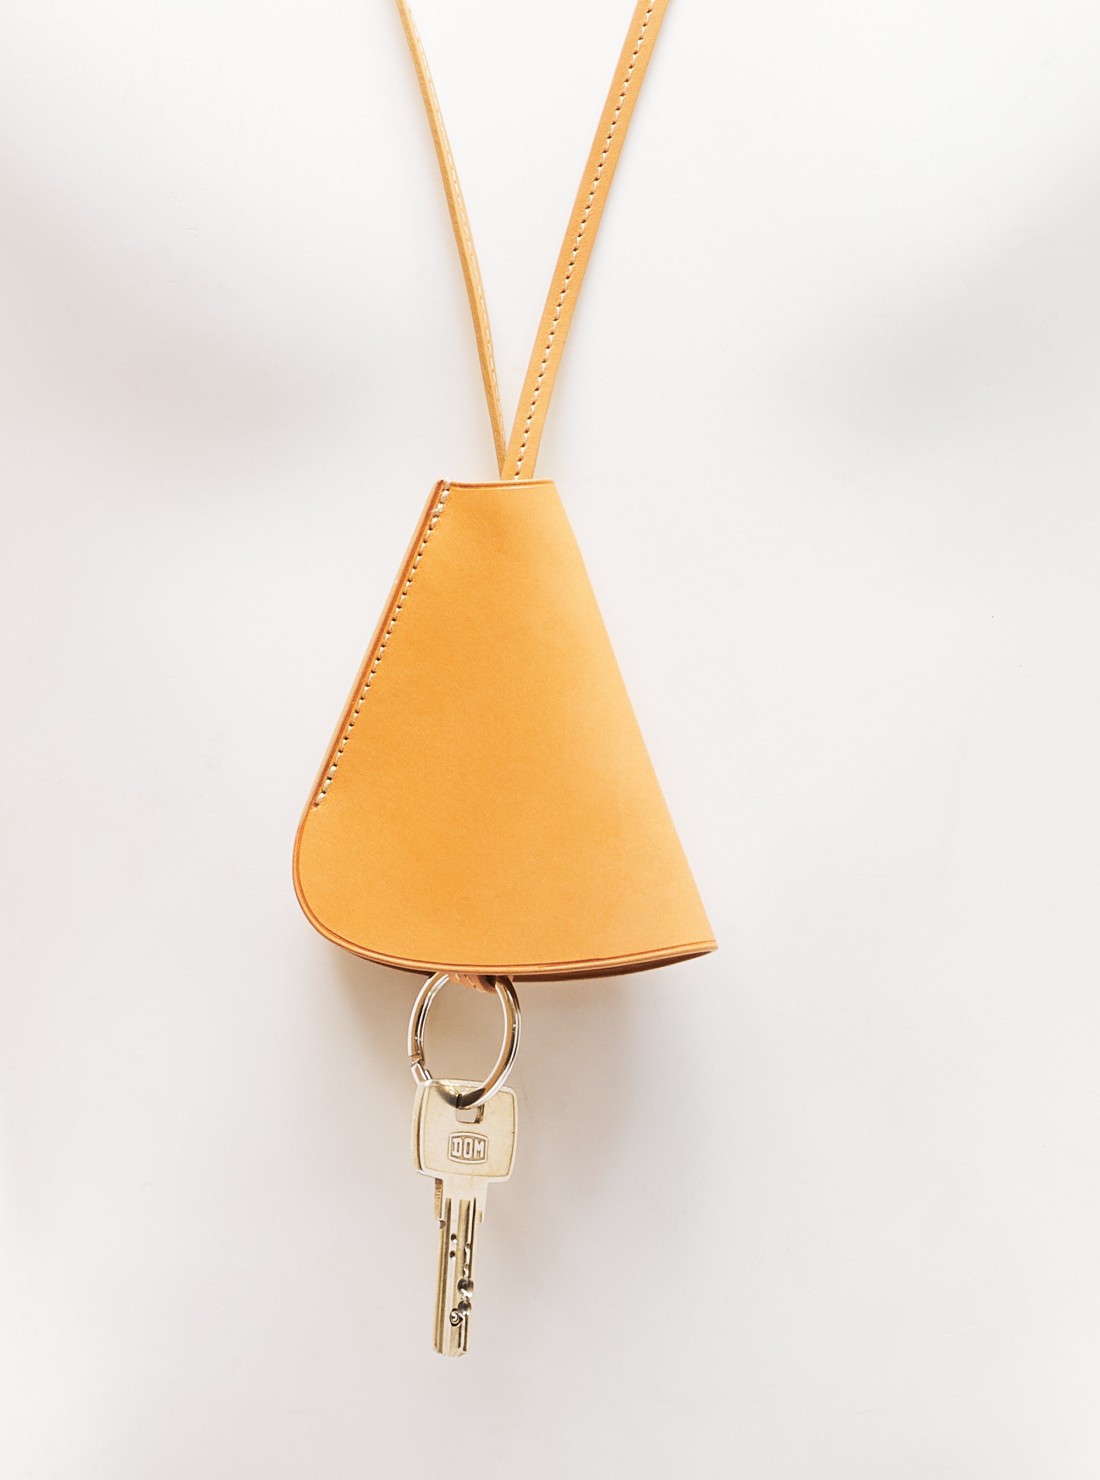 Necklace bell for keys